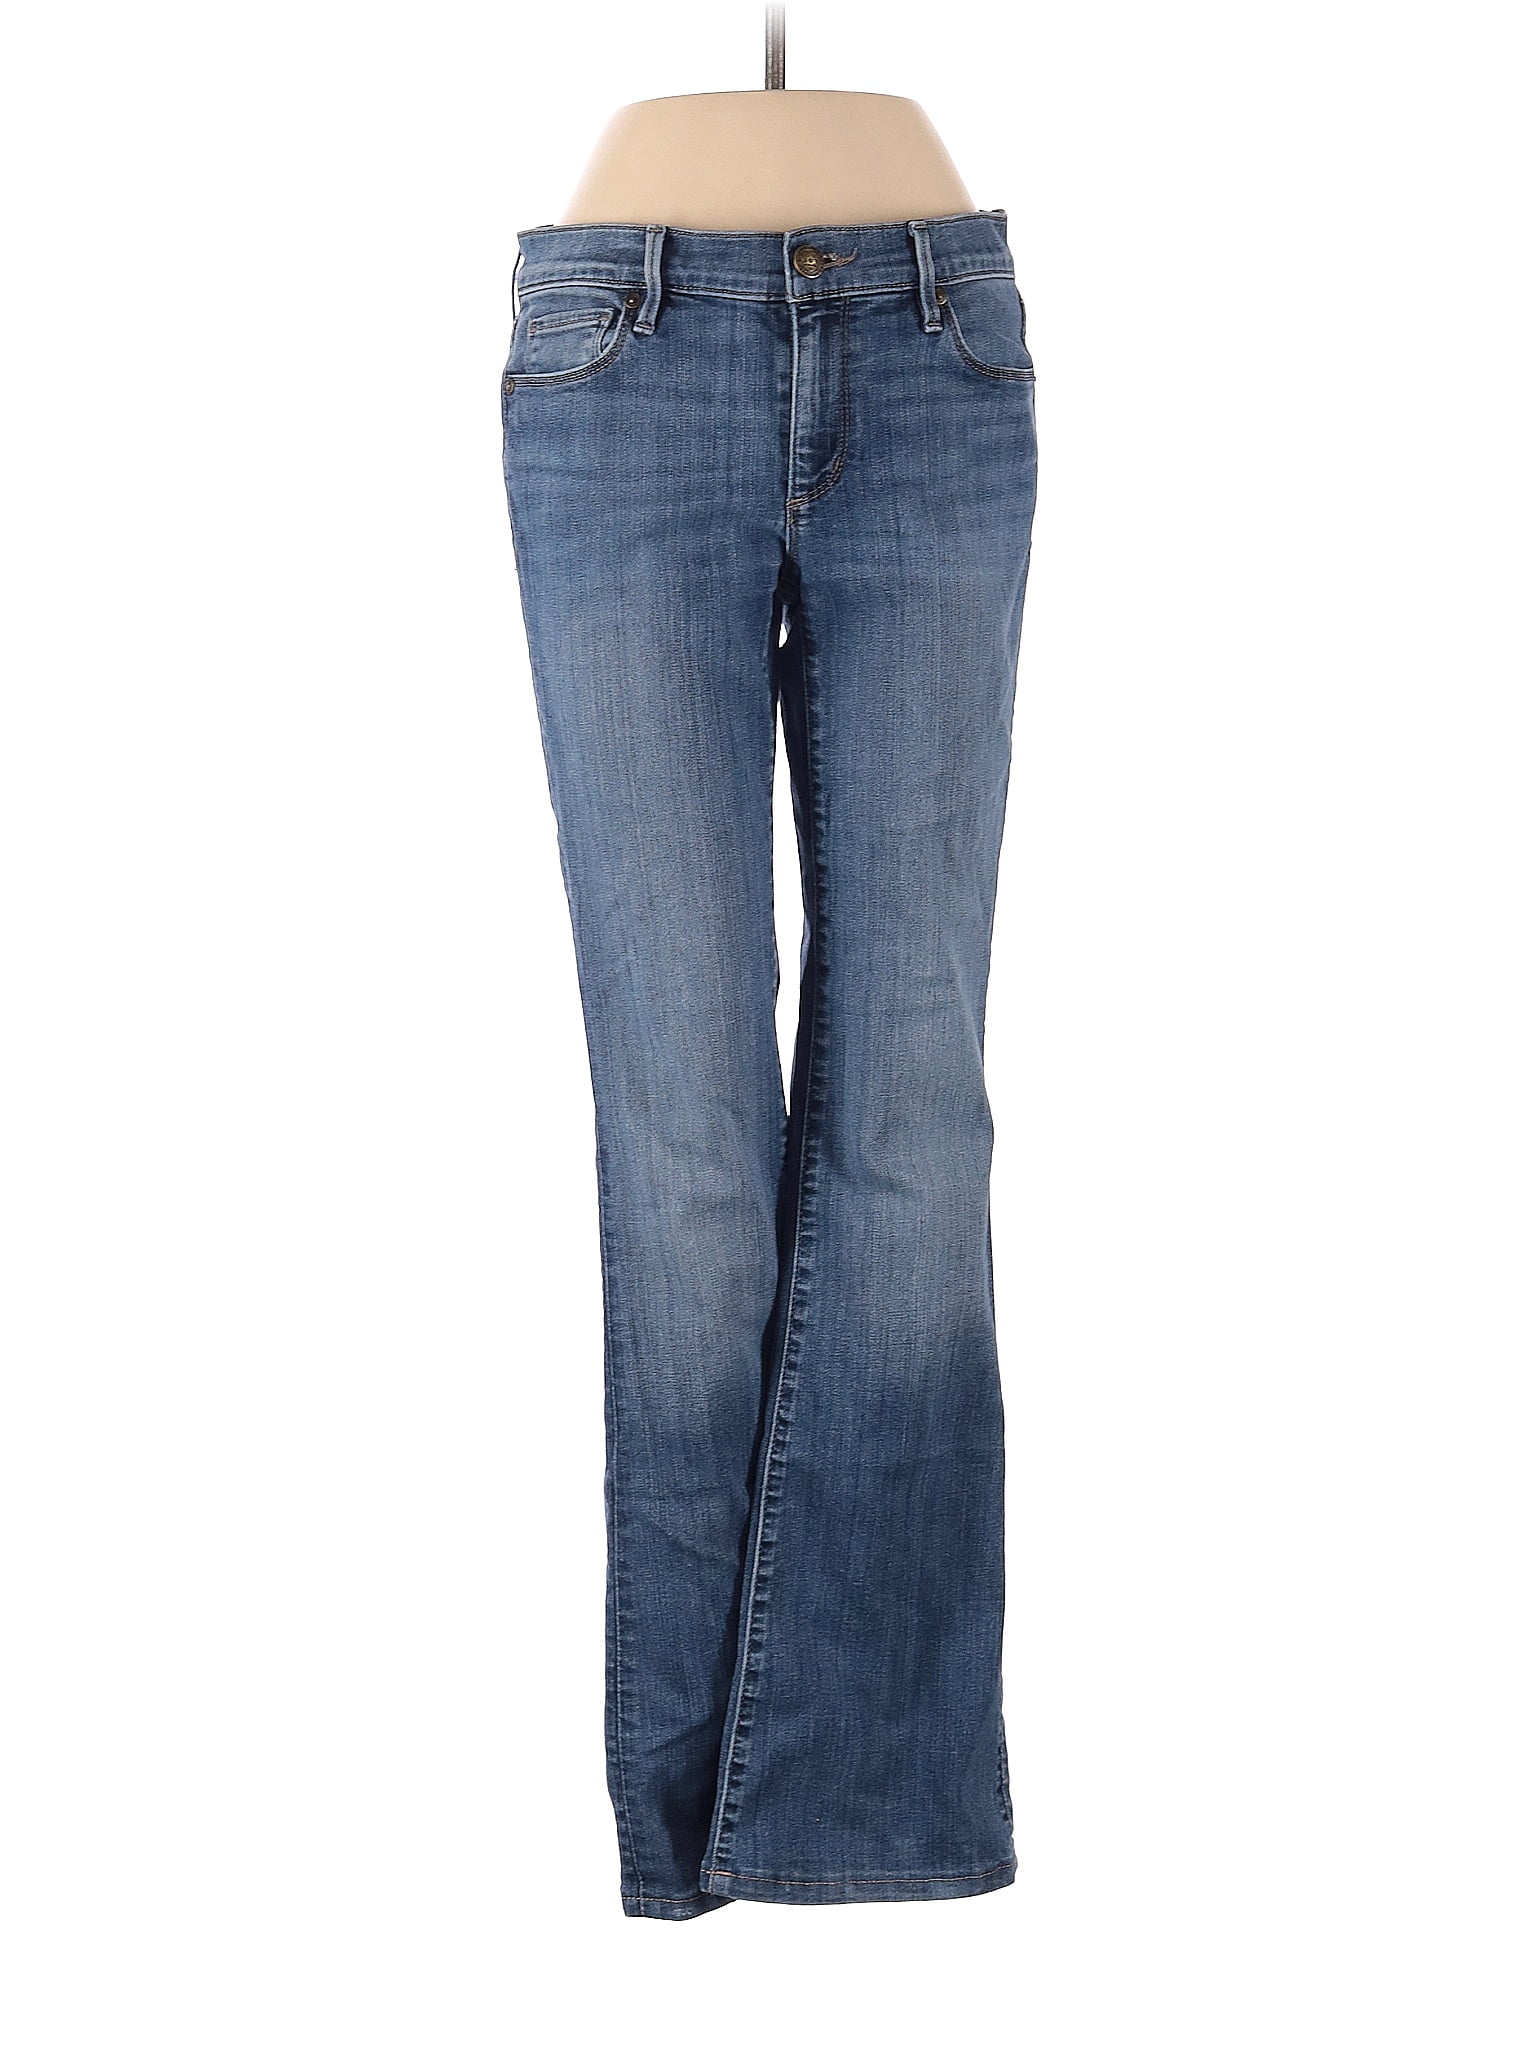 Ann Taylor LOFT Solid Blue Jeans 26 Waist - 69% off | thredUP